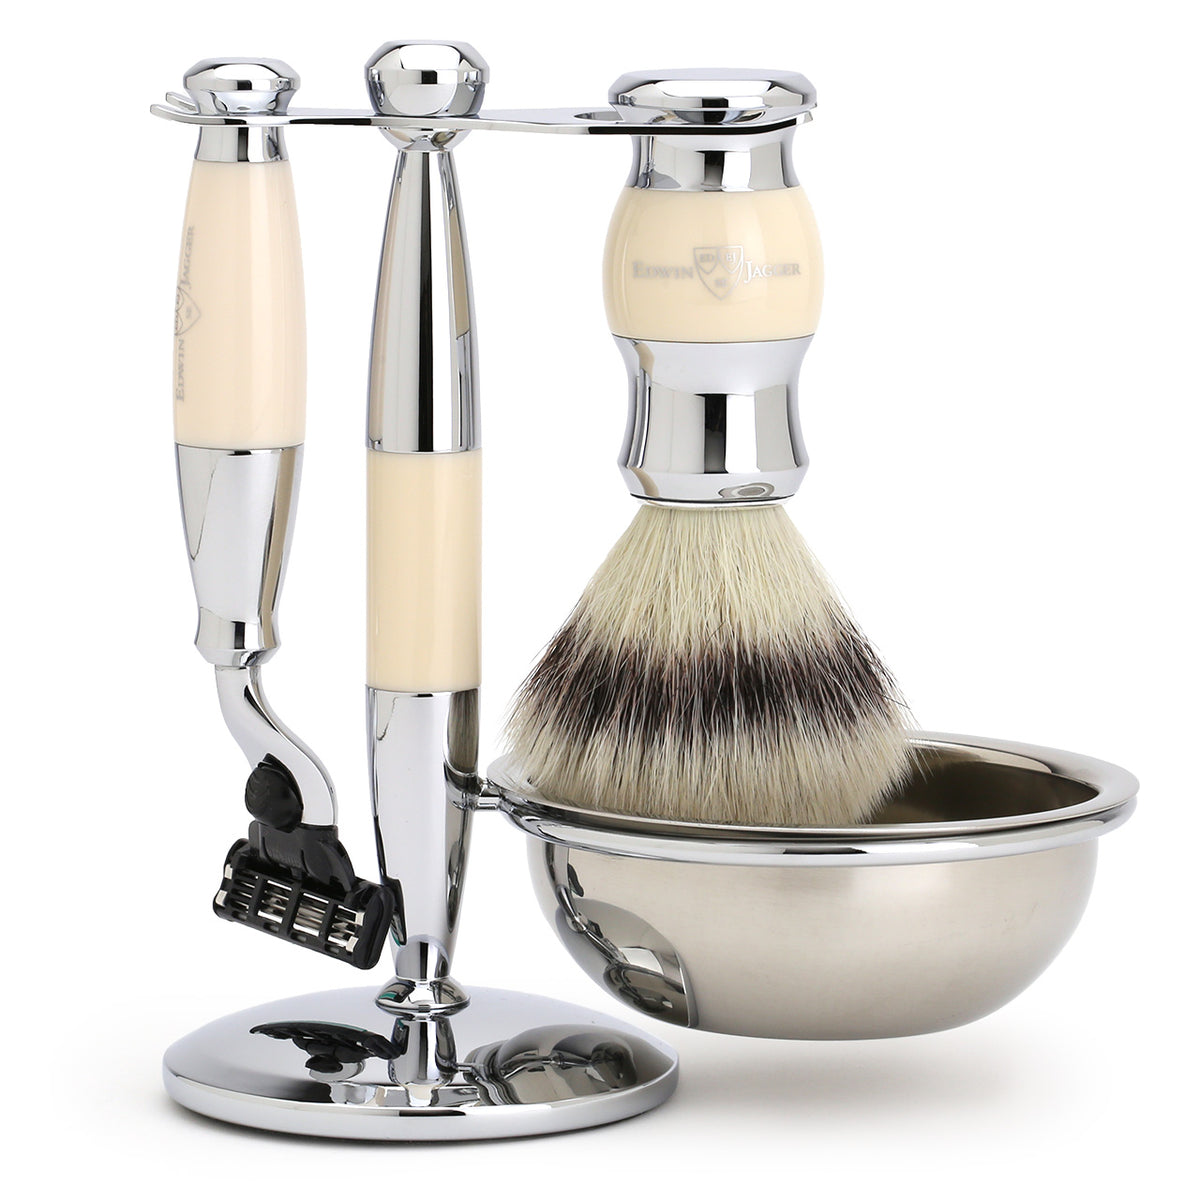 Edwin Jagger Shaving Set with Bowl, Shaving Brush, Mach3 Razor &amp; Stand - Imitation Ivory